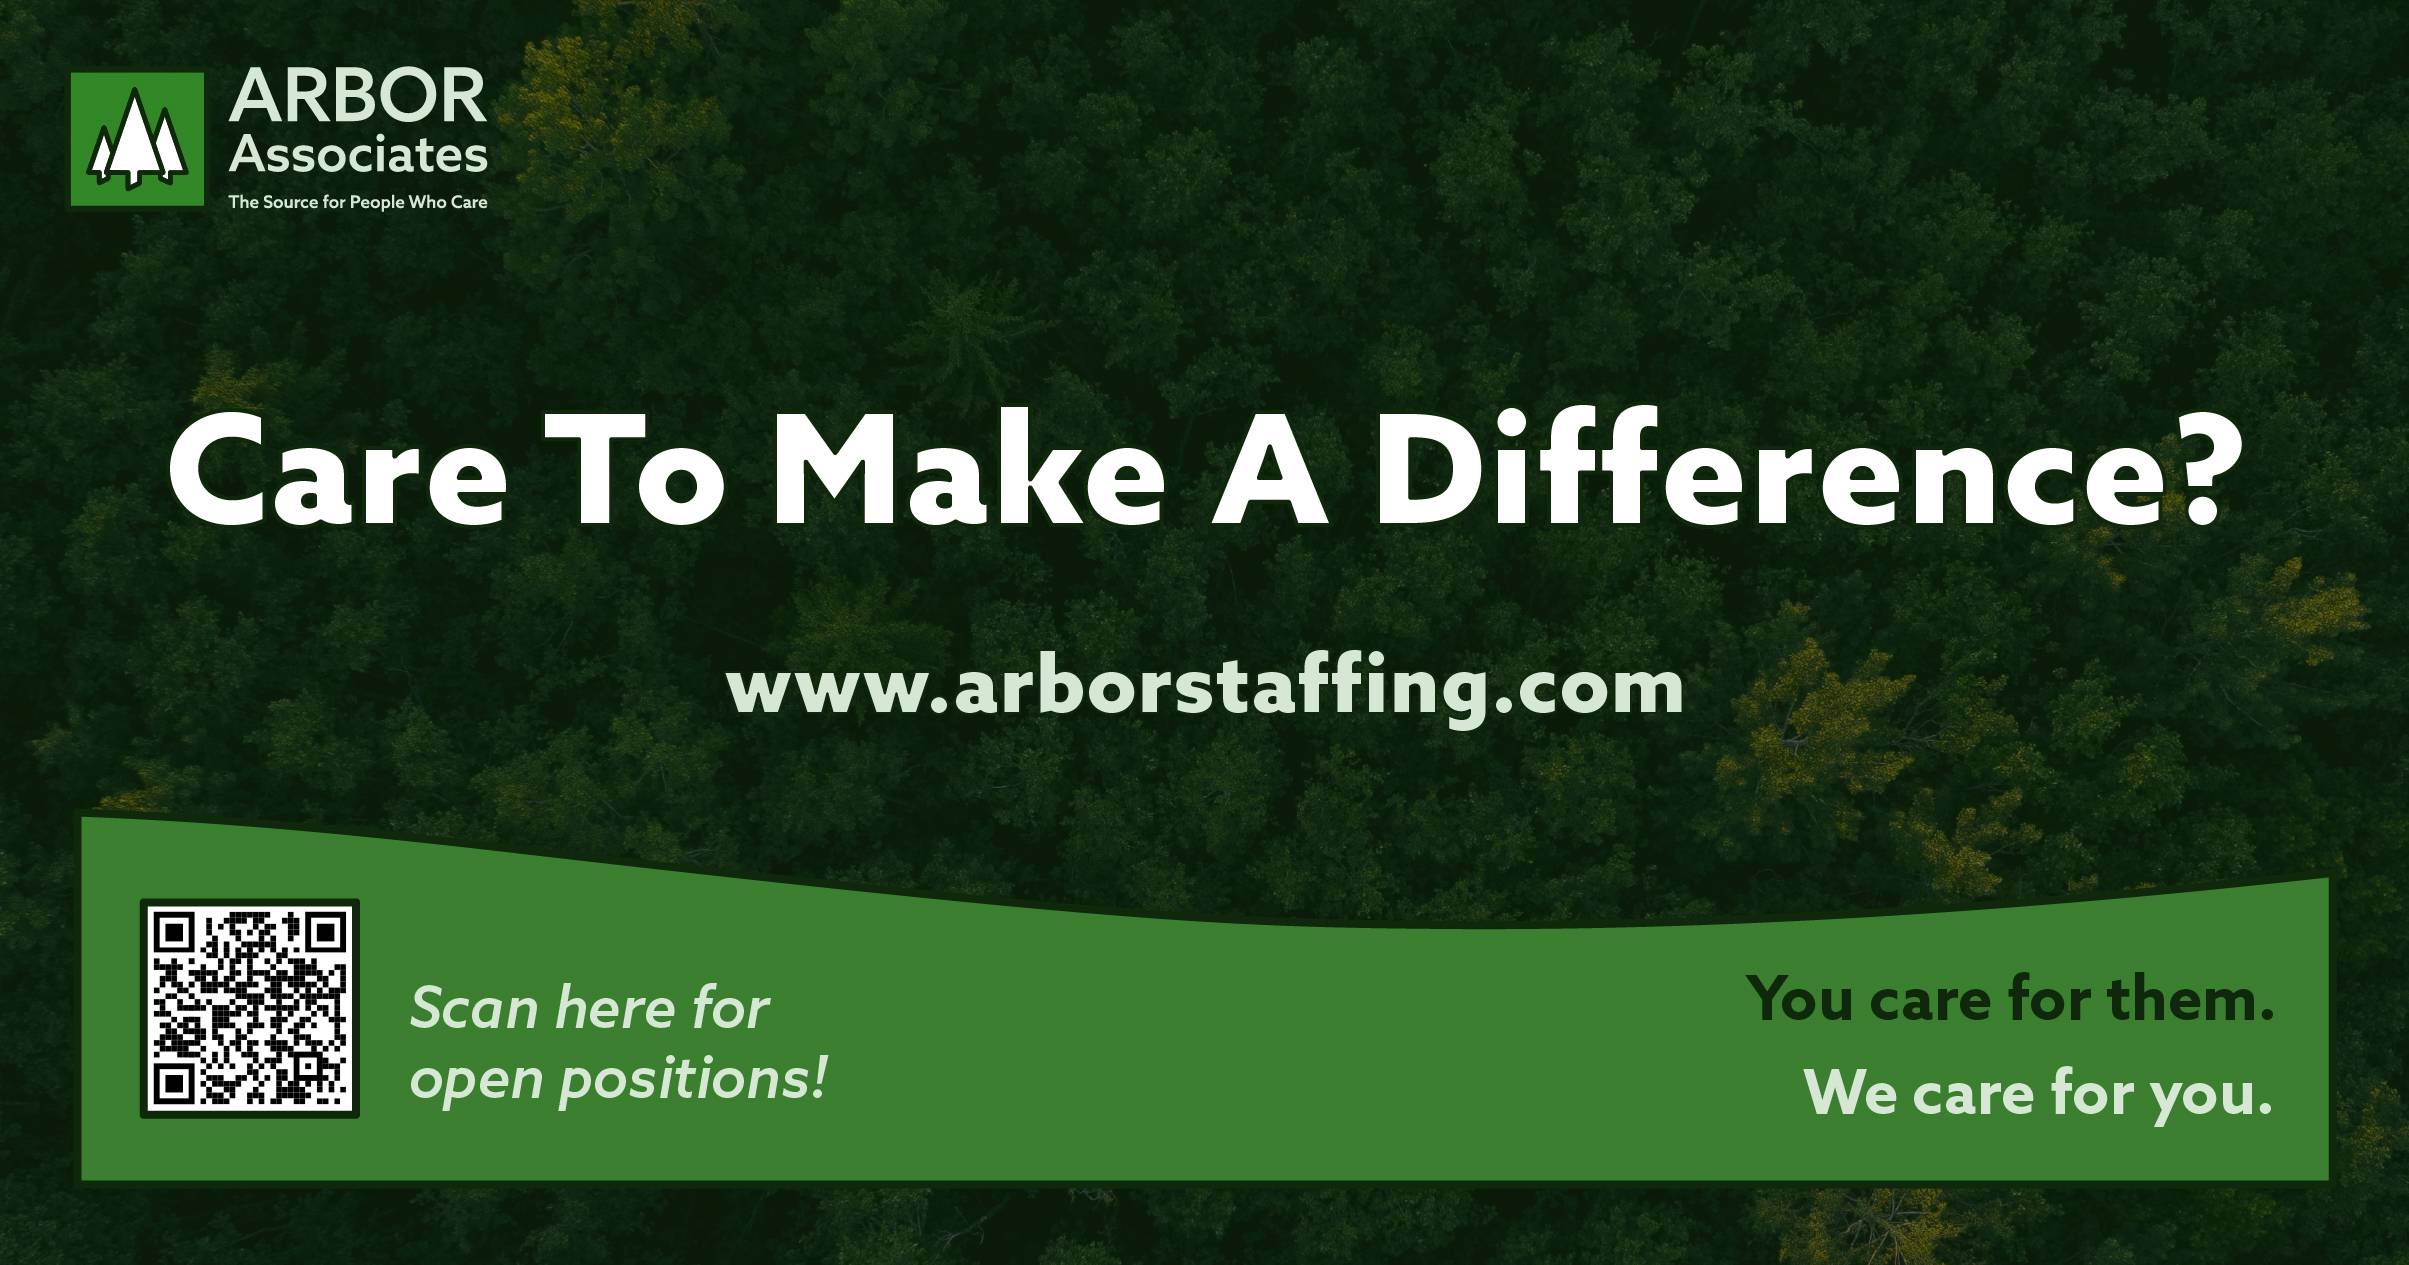 Arbor Associates: Homepage